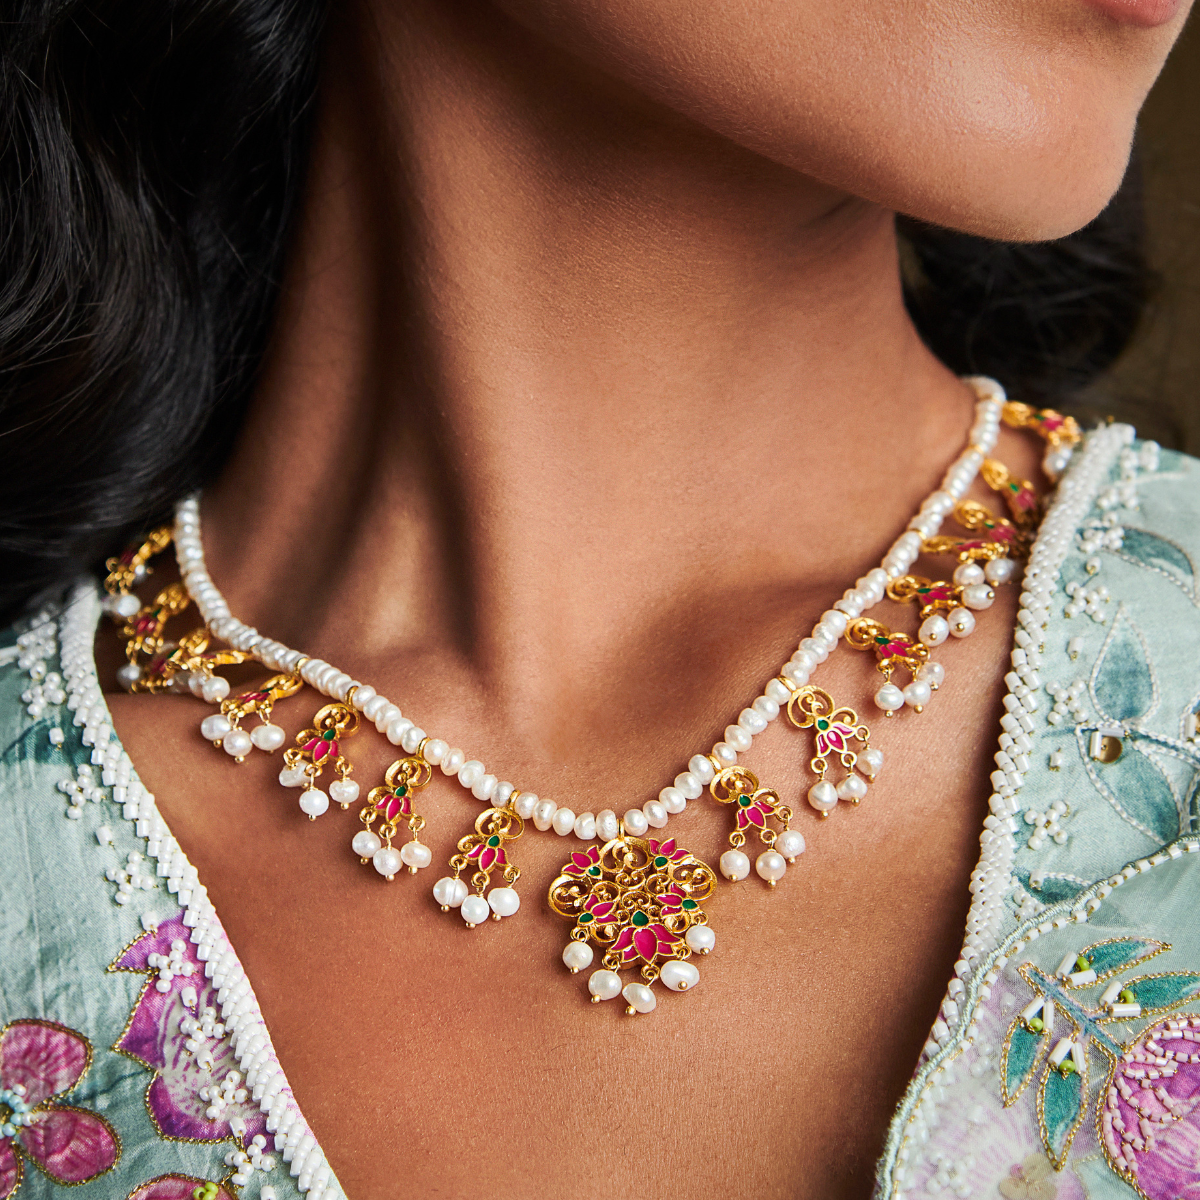 Lotus Drops Pearl Necklace in Pink Enamel